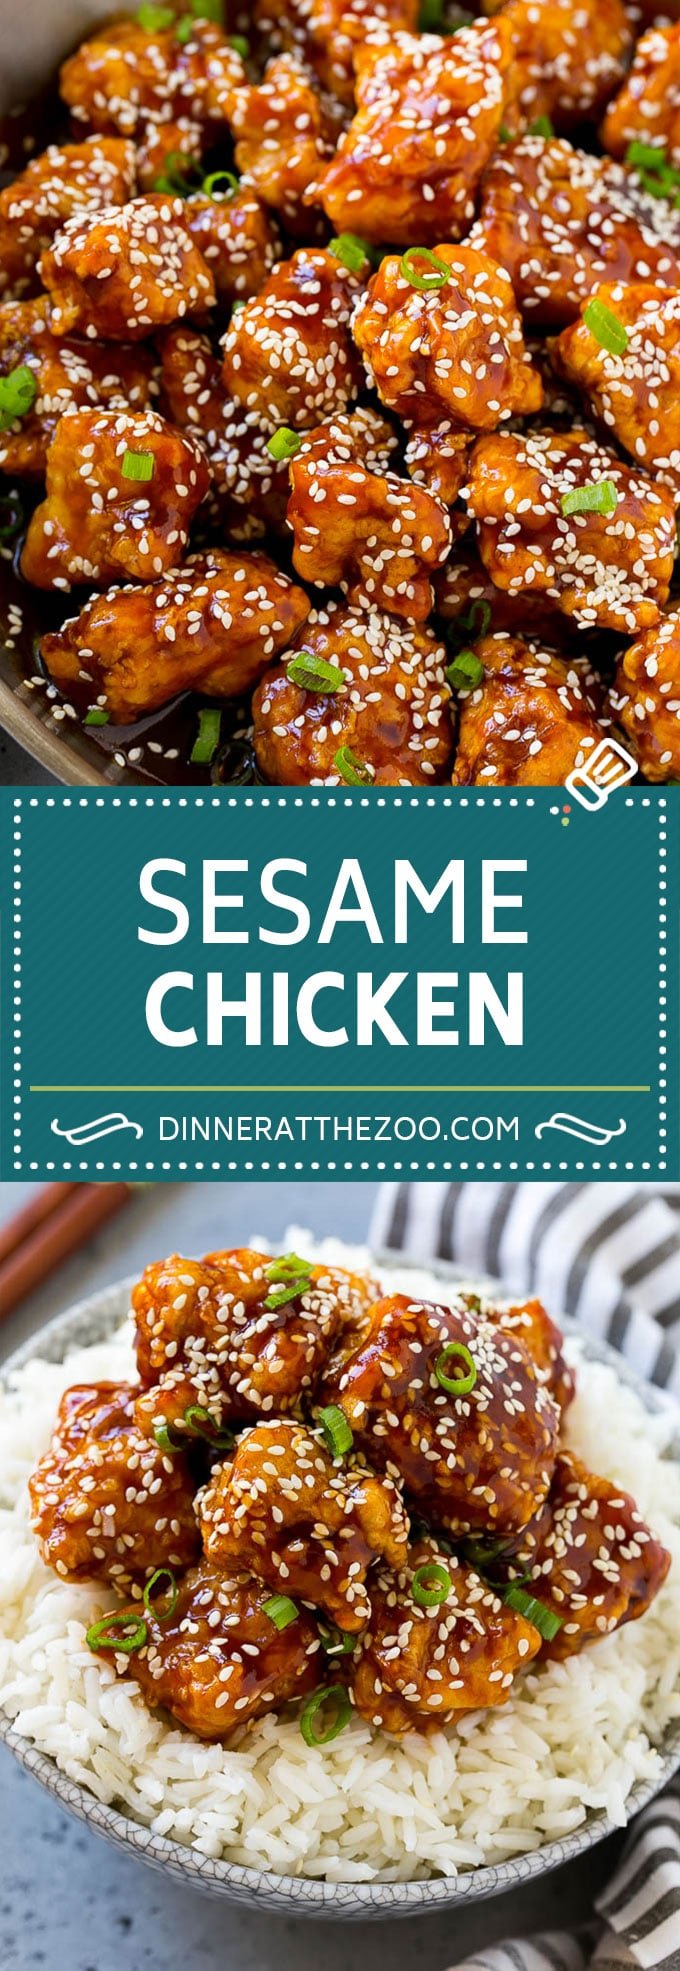 Sesame Chicken Recipe | Crispy Chicken | Asian Chicken #sesame #chicken #asian #dinner #dinneratthezoo